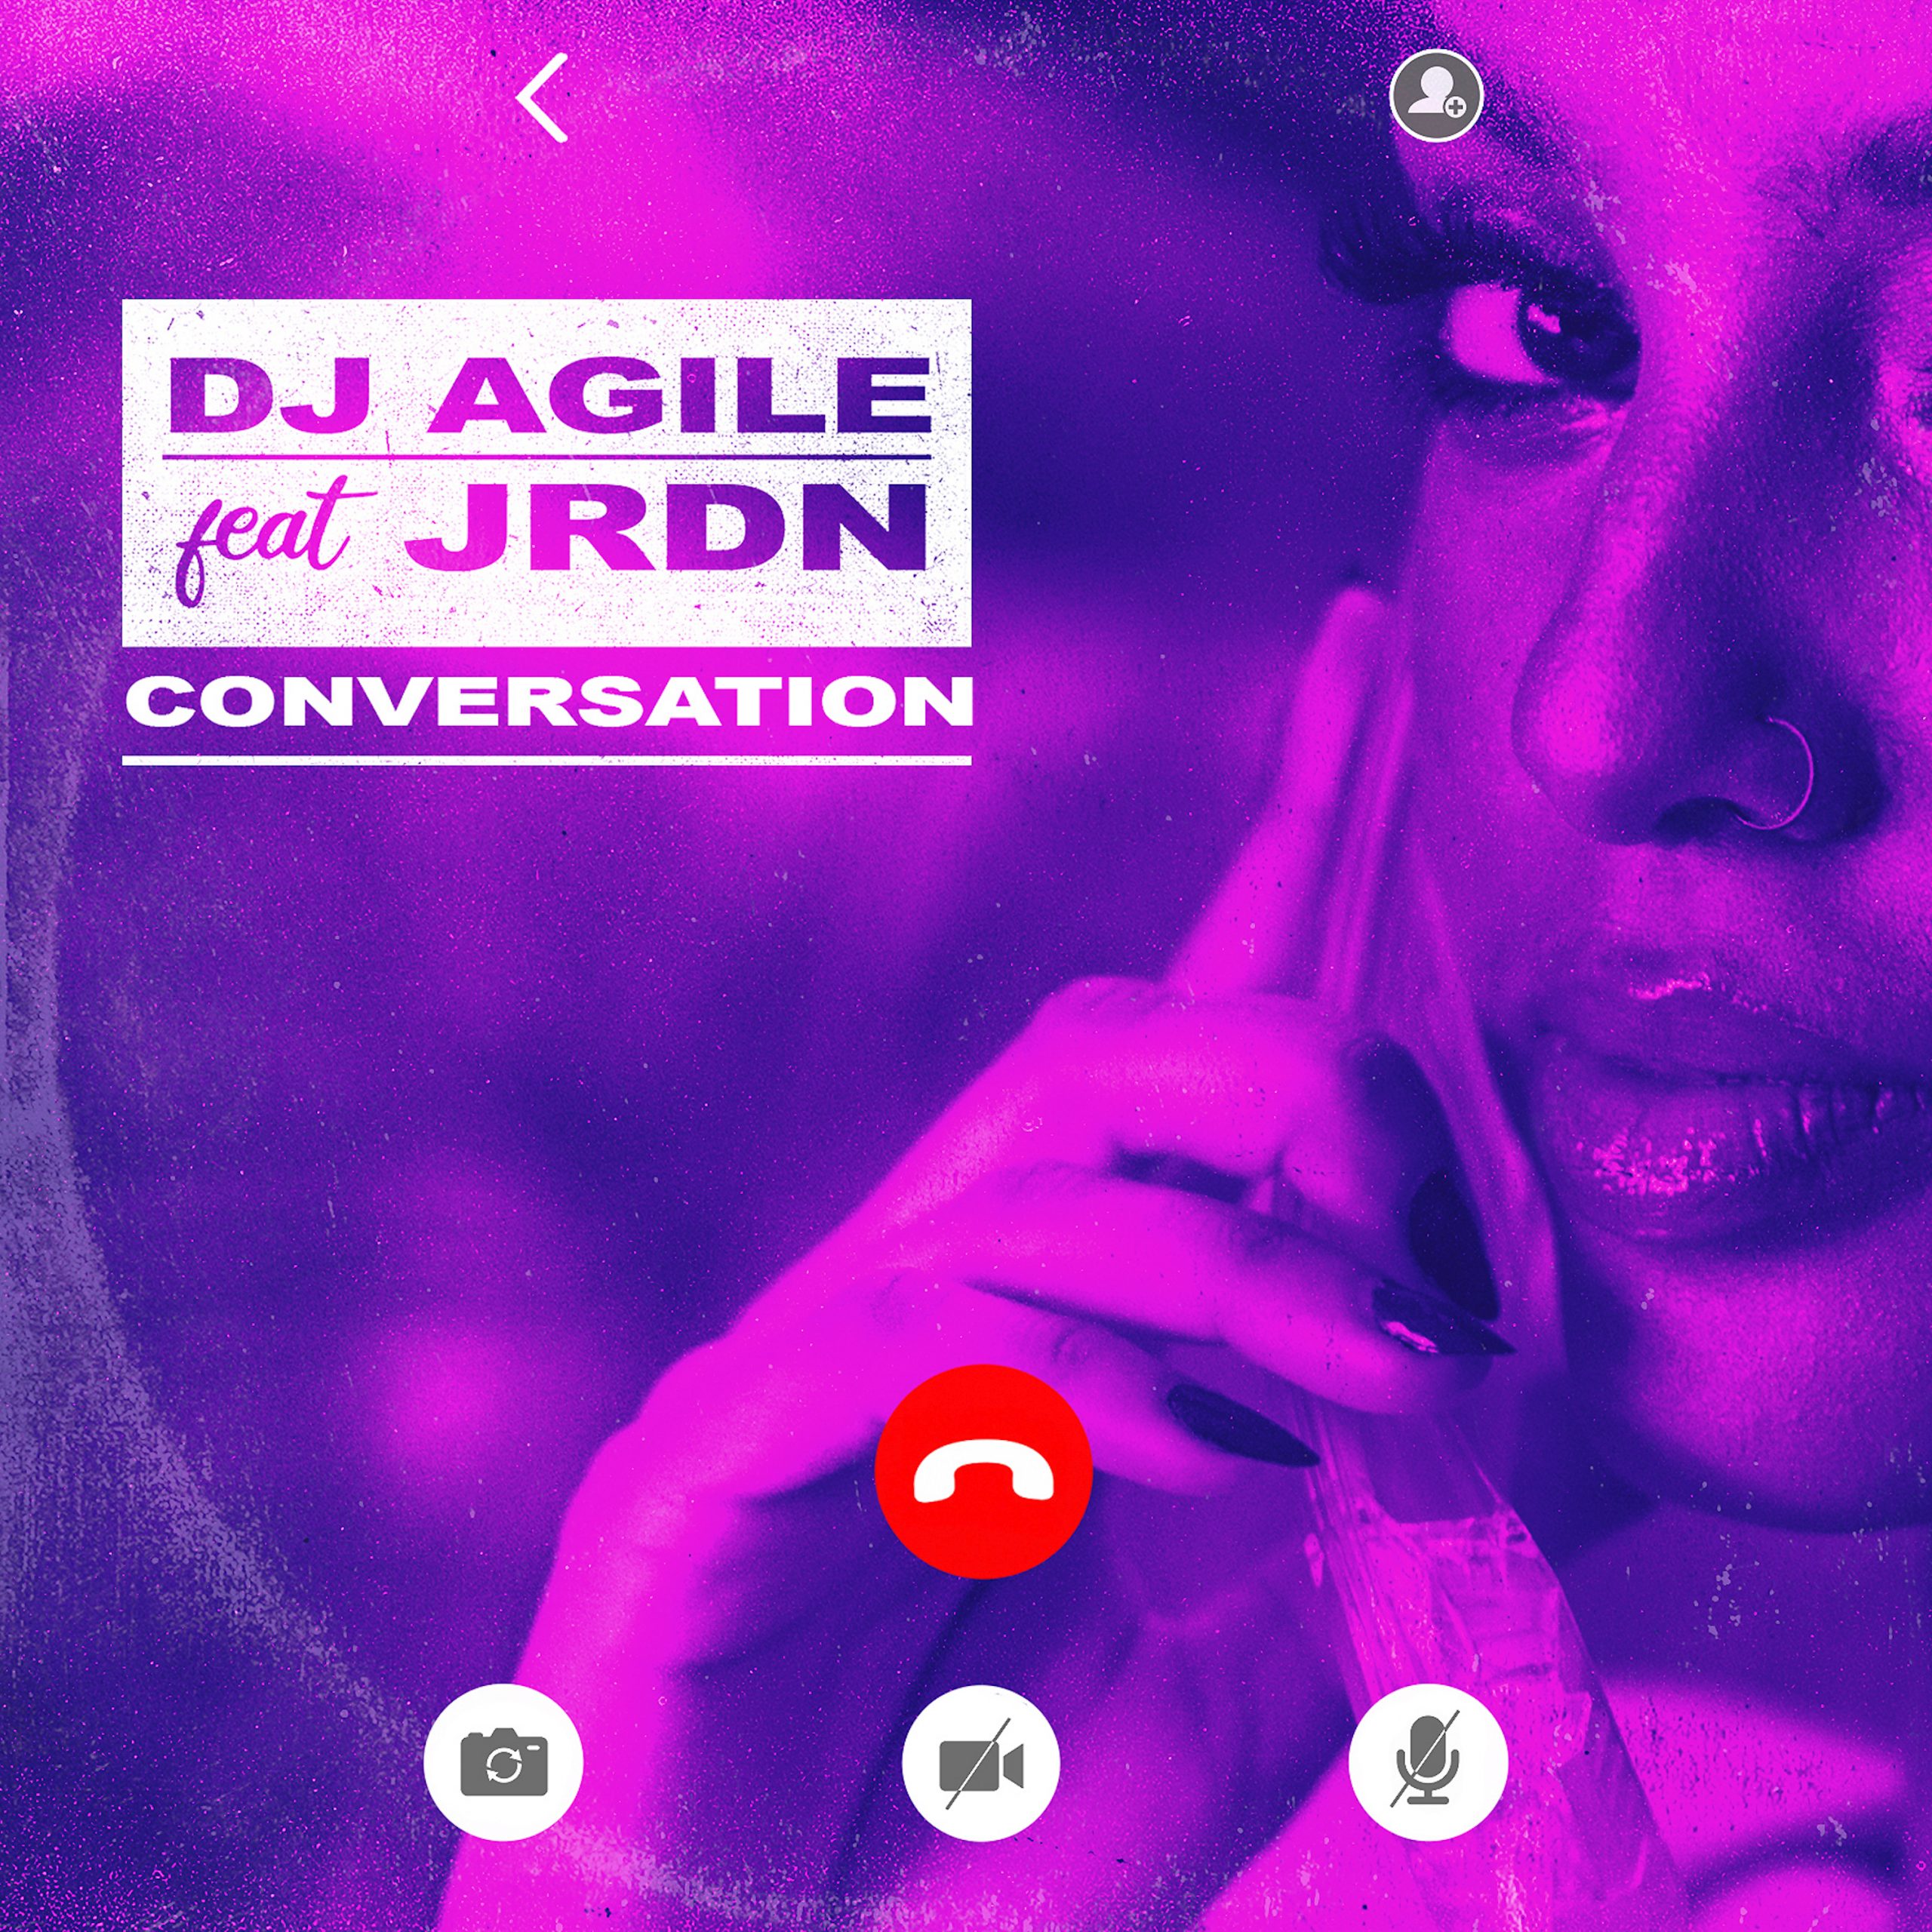 DJ Agile – “Conversation” feat. JRDN